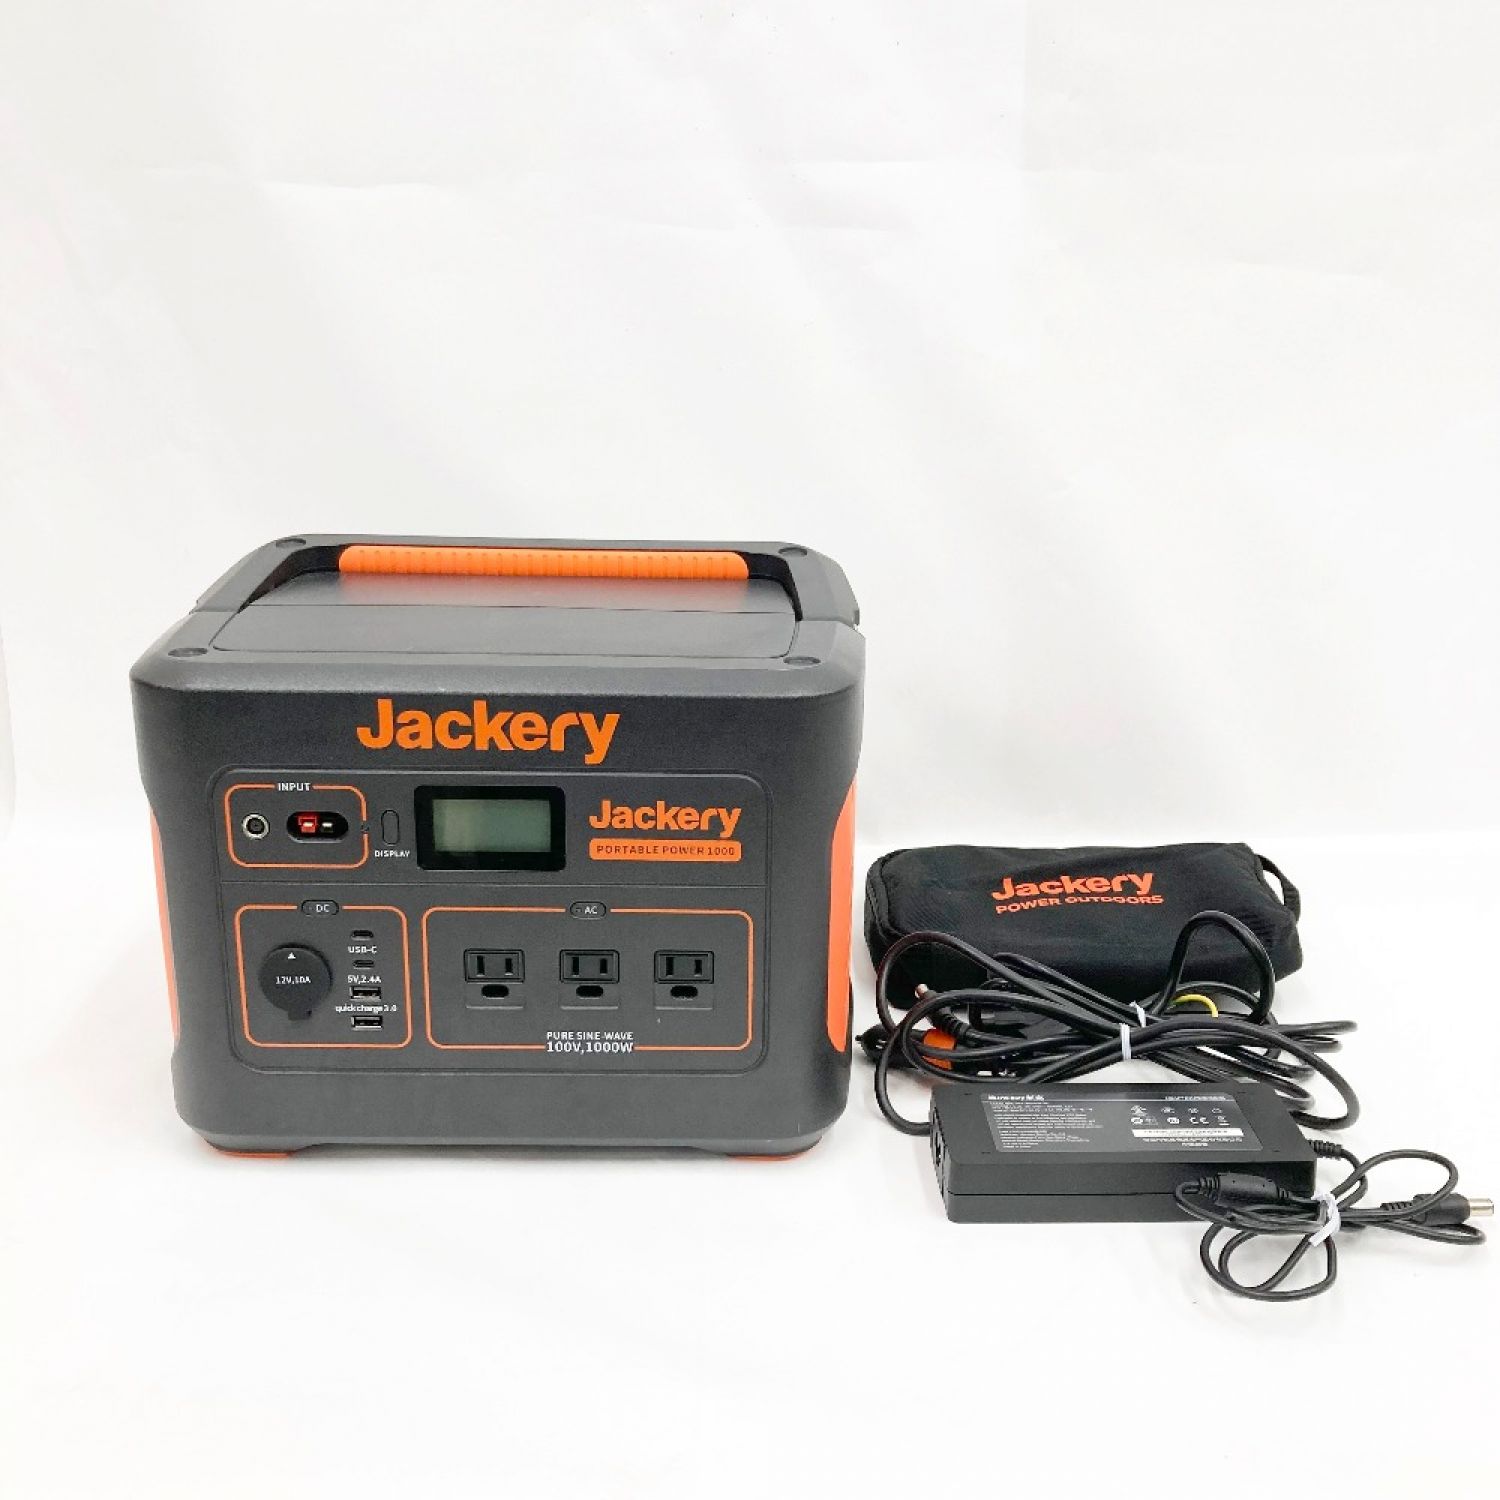 Jackery ジャクリ ポータブル電源1000 ほぼ未使用の保管品です。